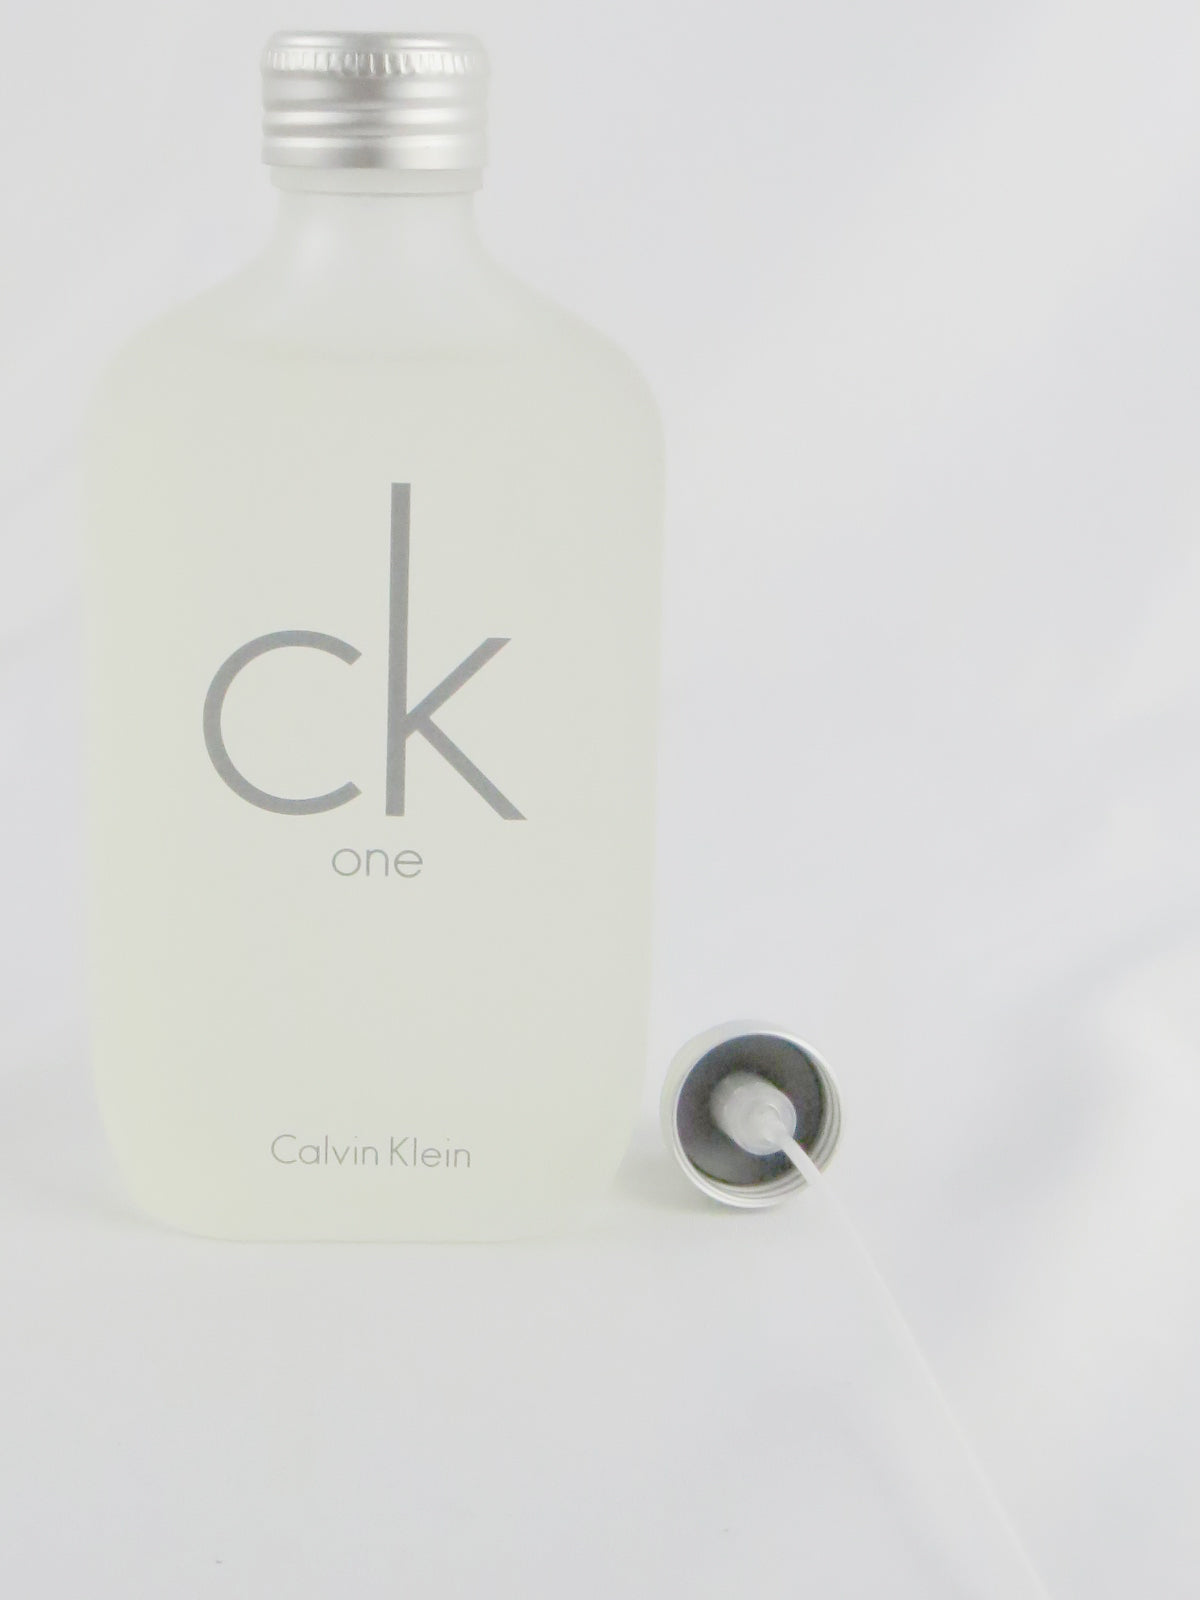 Perfume CK ONE by Calvin Klein 3.4 oz Eau De Toilette Spray (Unisex)  for Women - Banachief Outlet